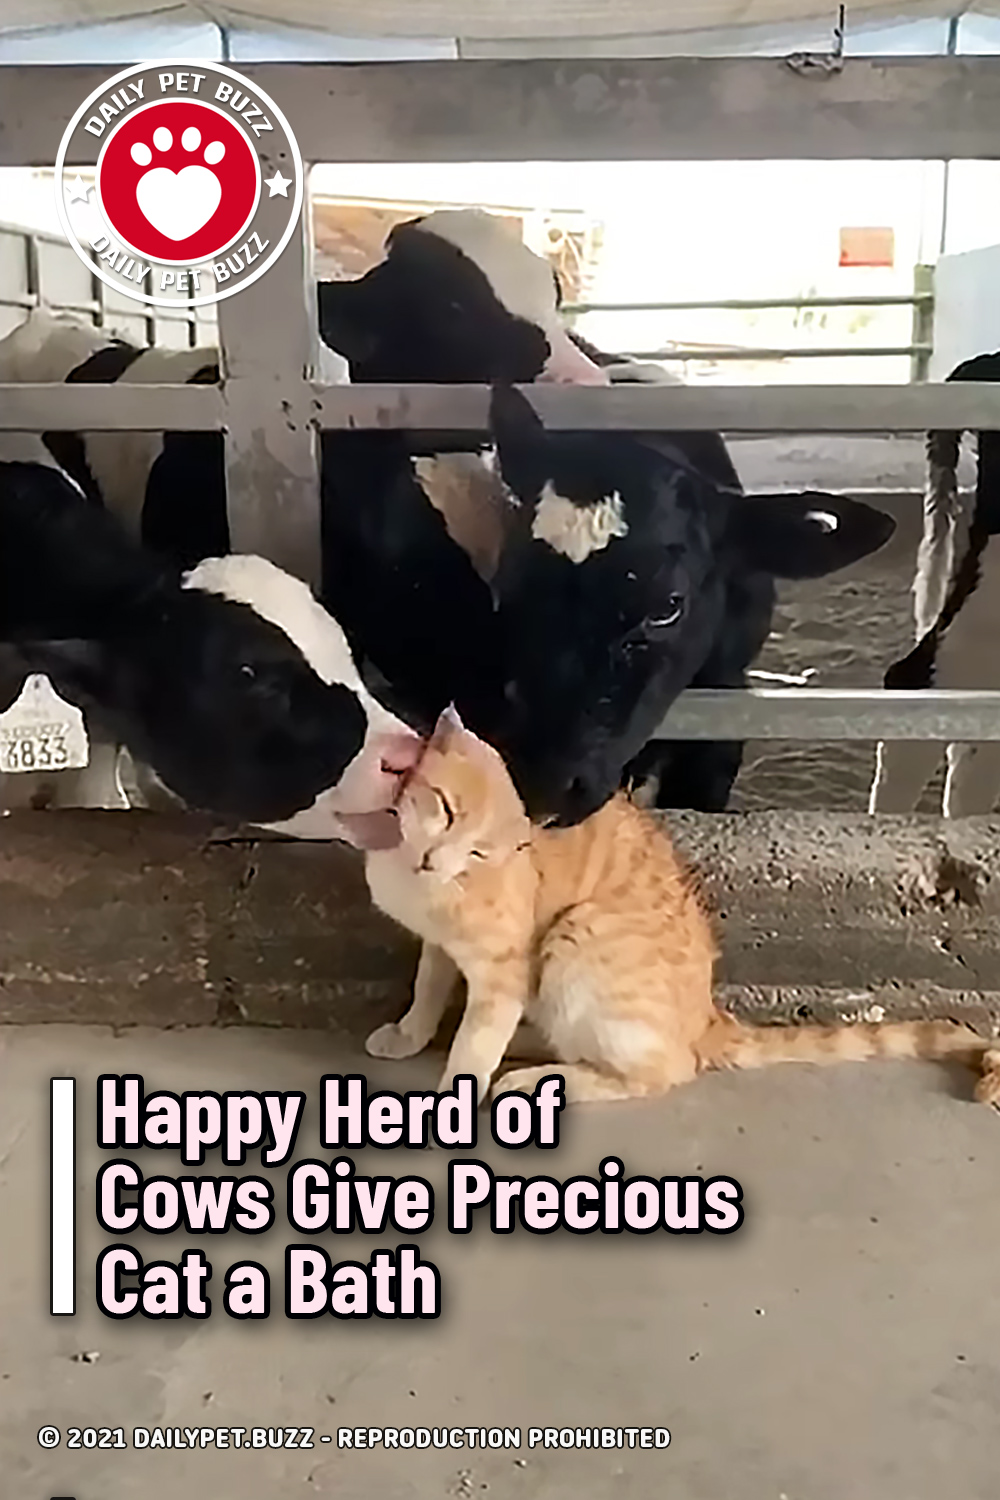 Happy Herd of Cows Give Precious Cat a Bath